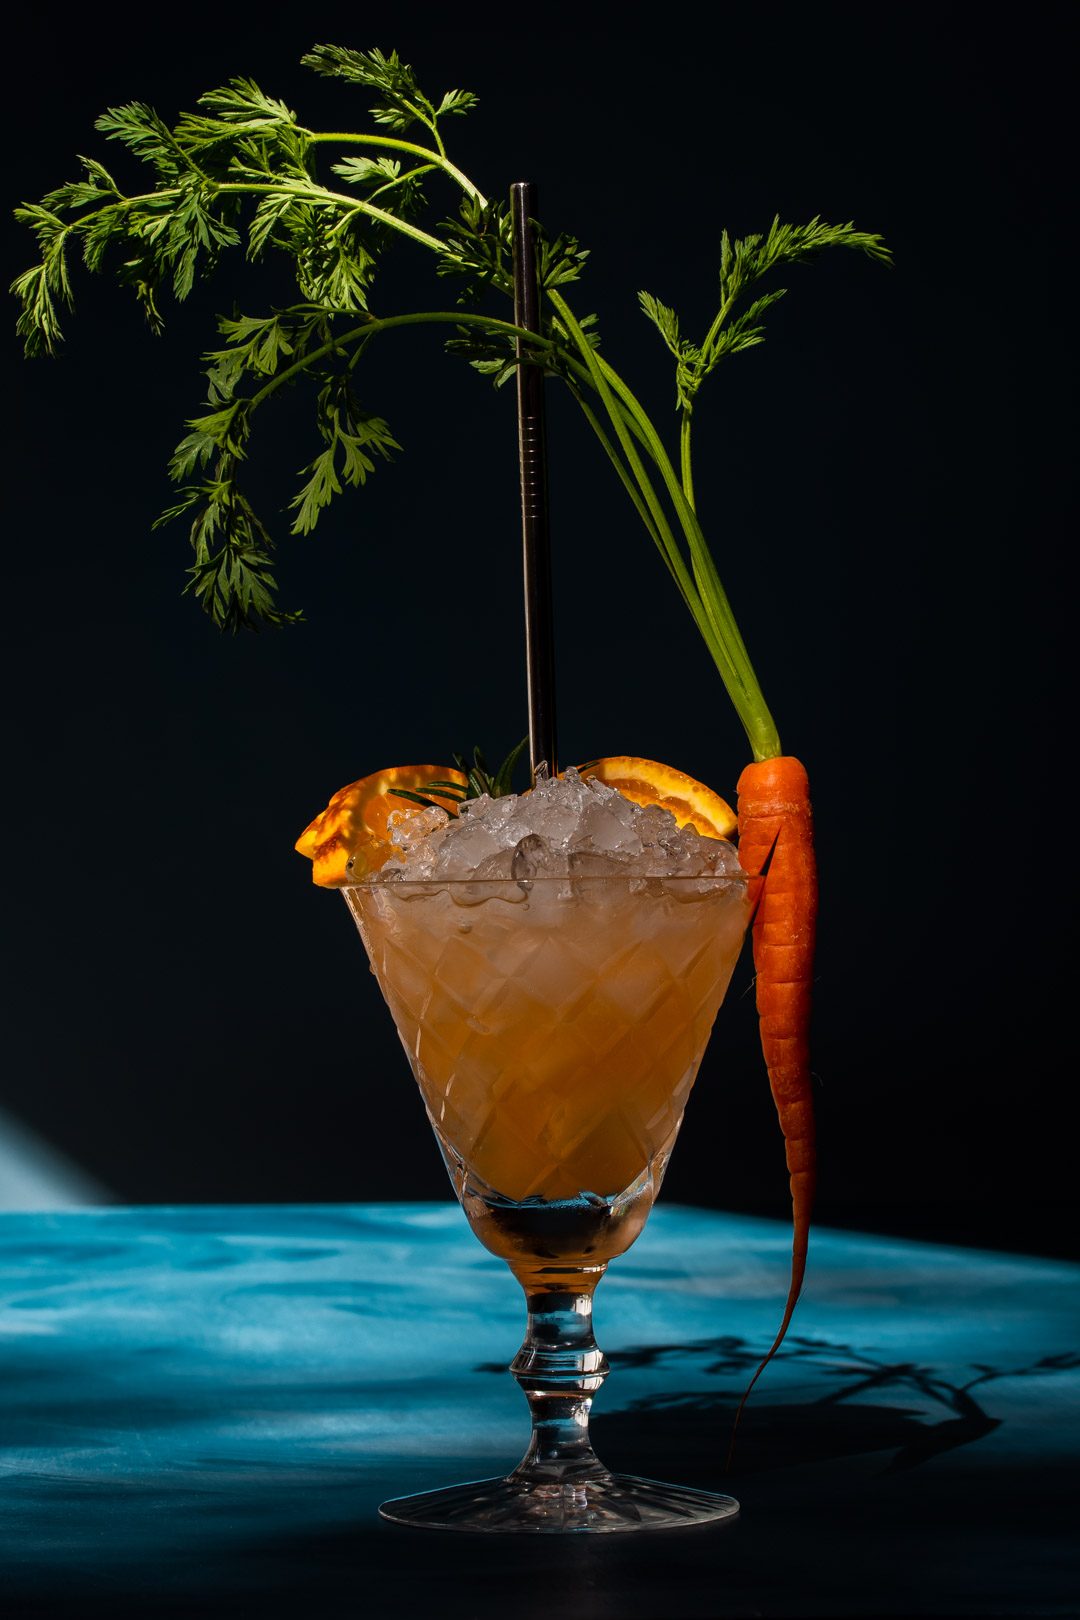 carrot shrub daisy cocktail with deep shadows on blue background